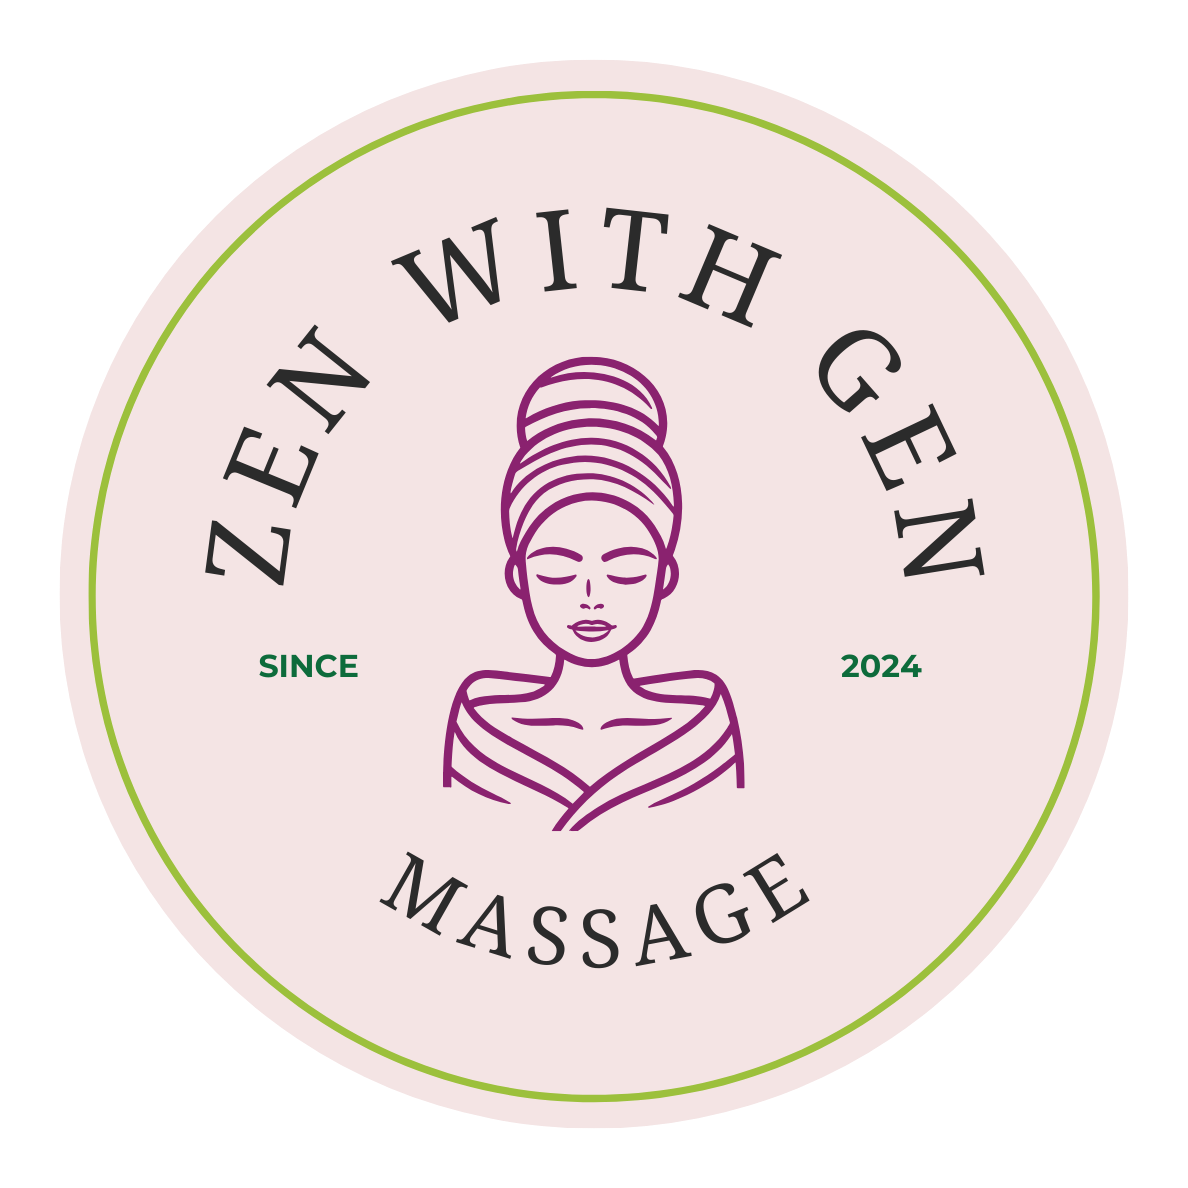 Zen with Gen Massage